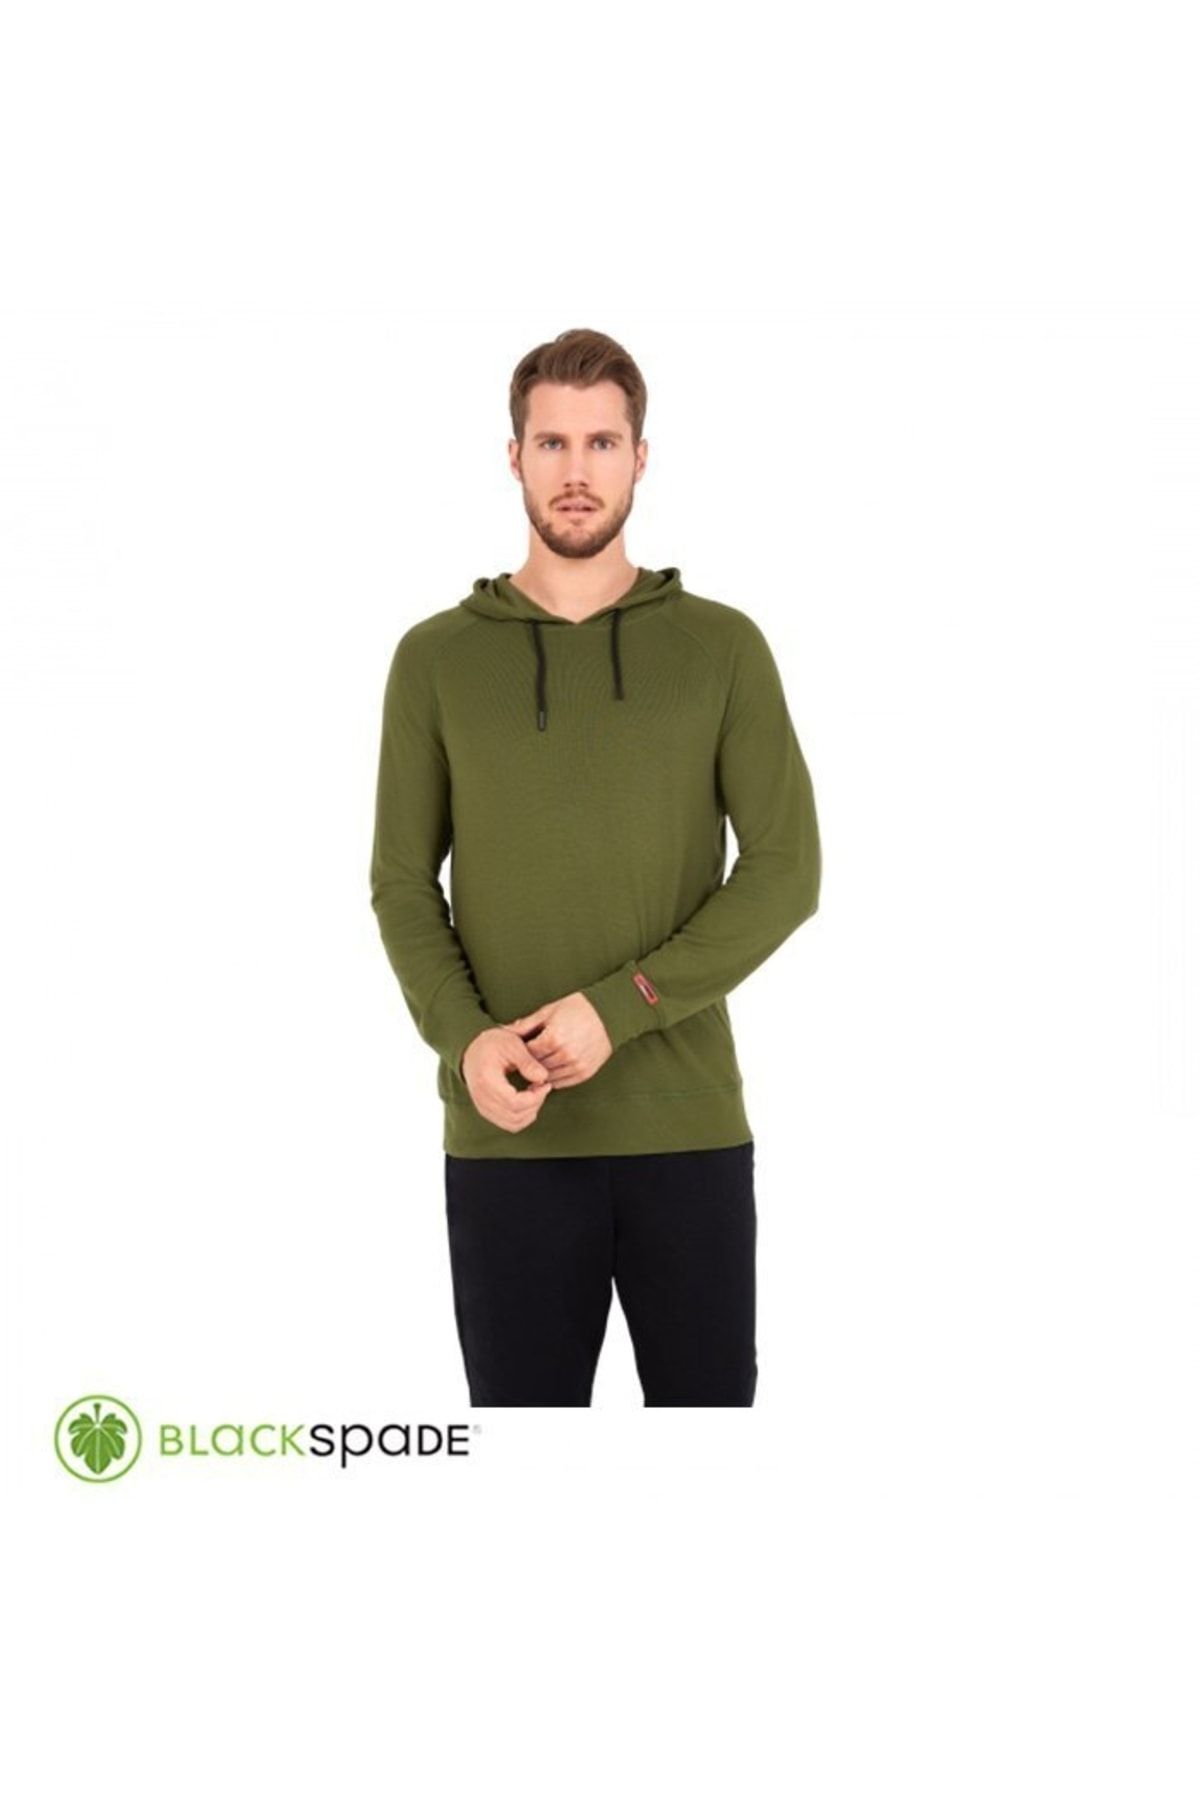 Blackspade Termal Sweatshirt 2. Seviye Yeşil Xxl